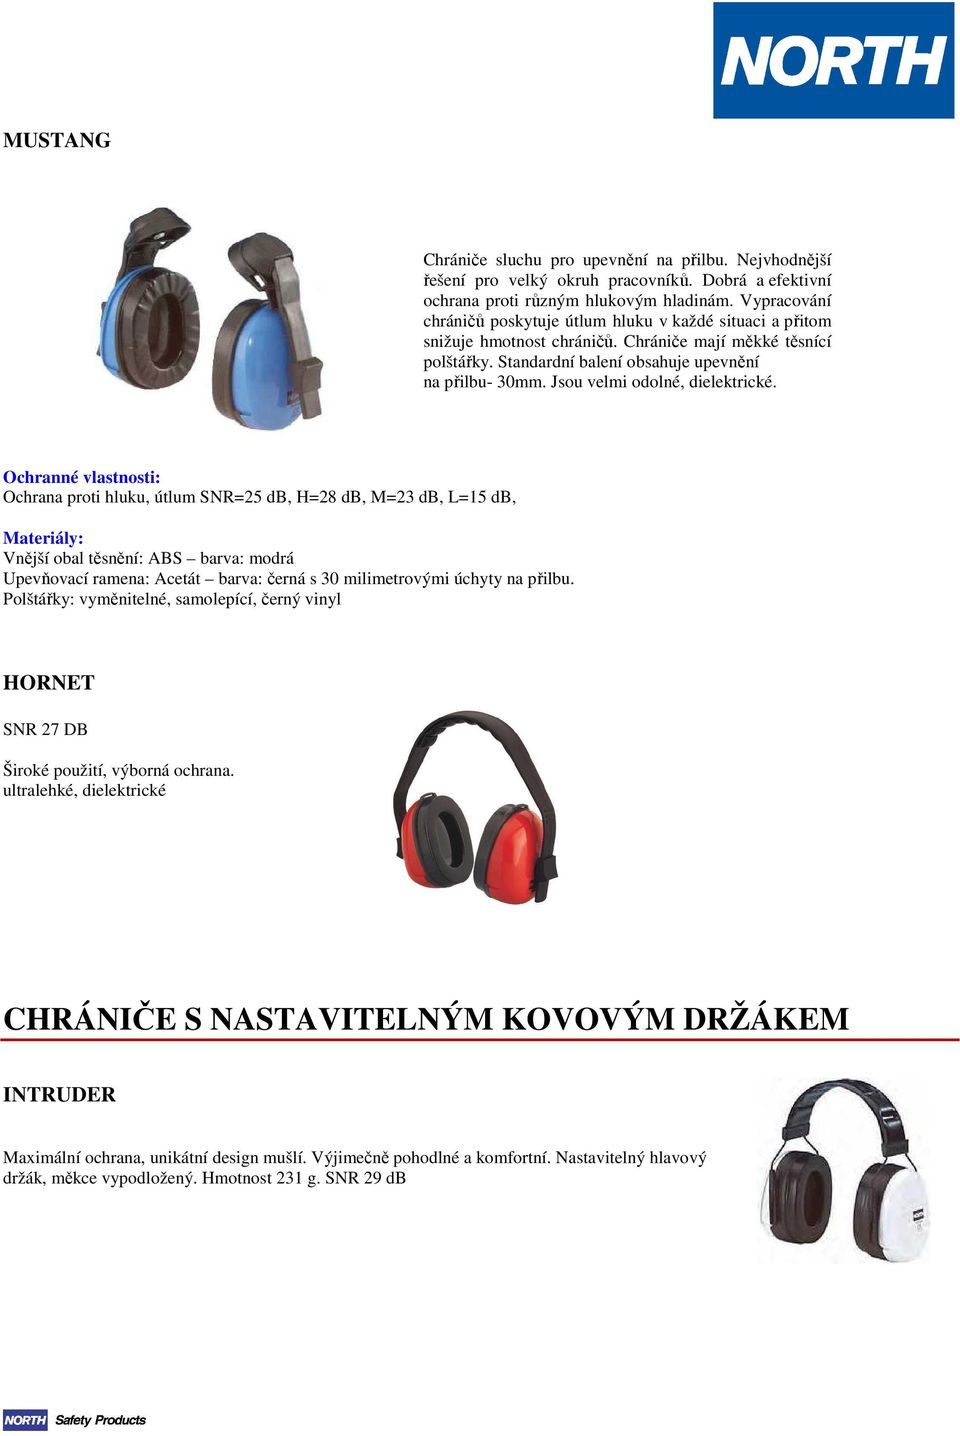 OCHRANA SLUCHU JEDNORÁZOVÉ UŠNÍ ZÁTKY. EN normy EN352-1 chrániče sluchu  EN352-2 zátky do uší EN352-3 helmy s chrániči uší - PDF Free Download